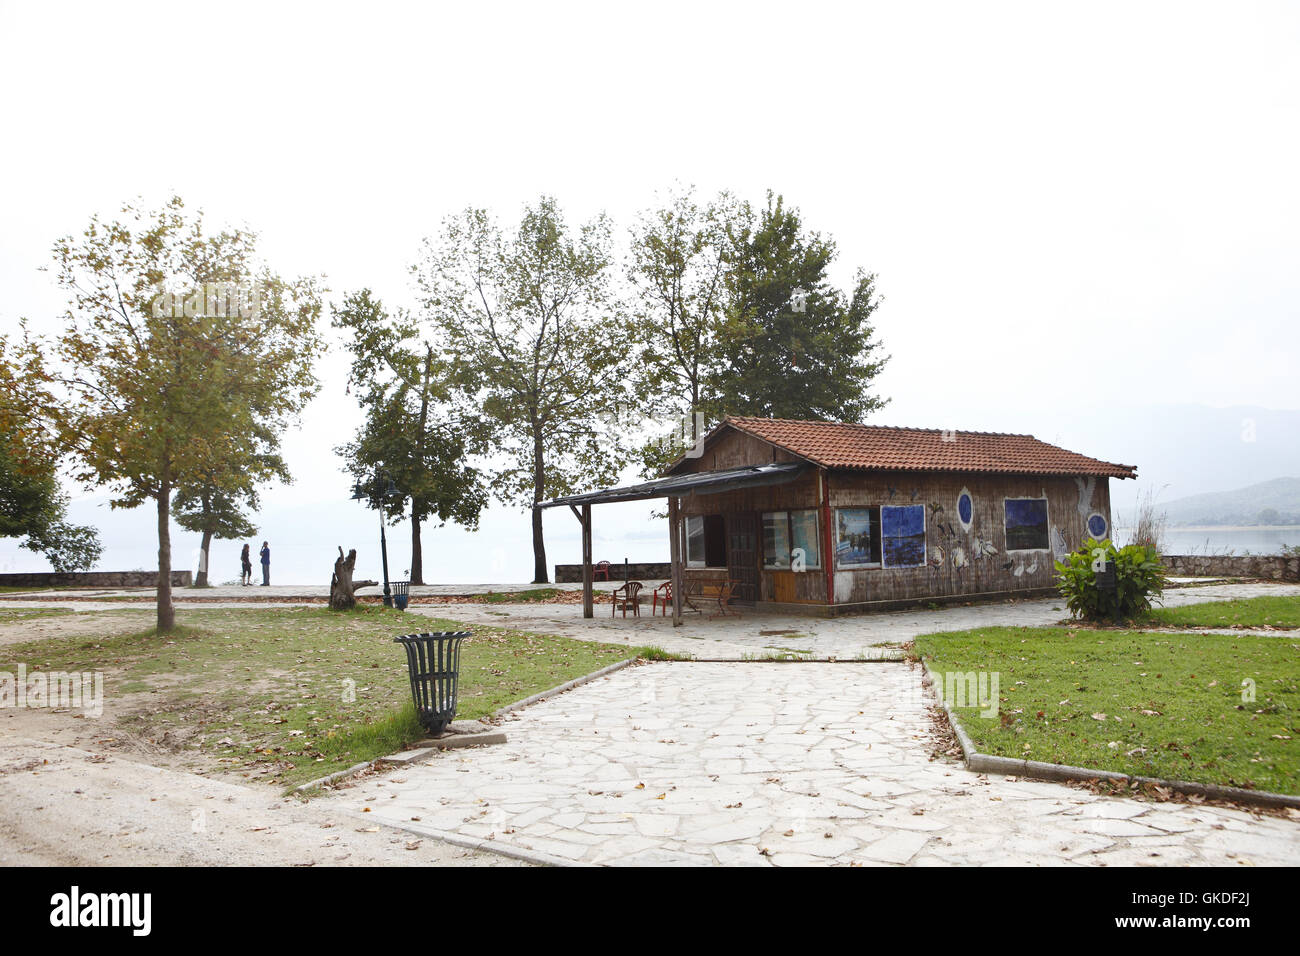 Tourist information centre / point at Lake Kerkini, Kerkini, Greece Stock Photo